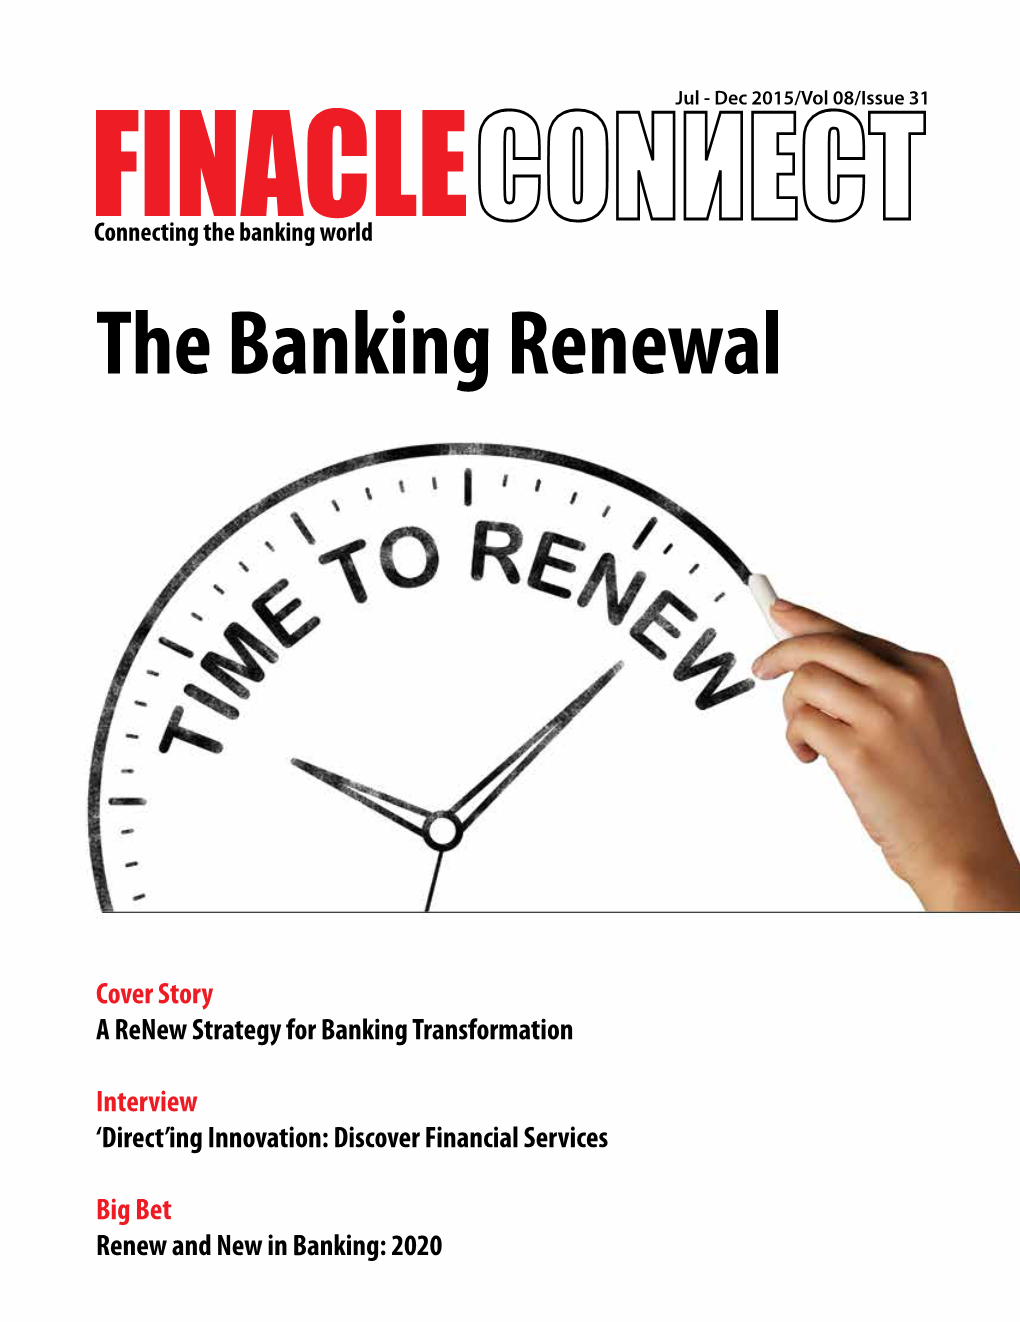 The Banking Renewal